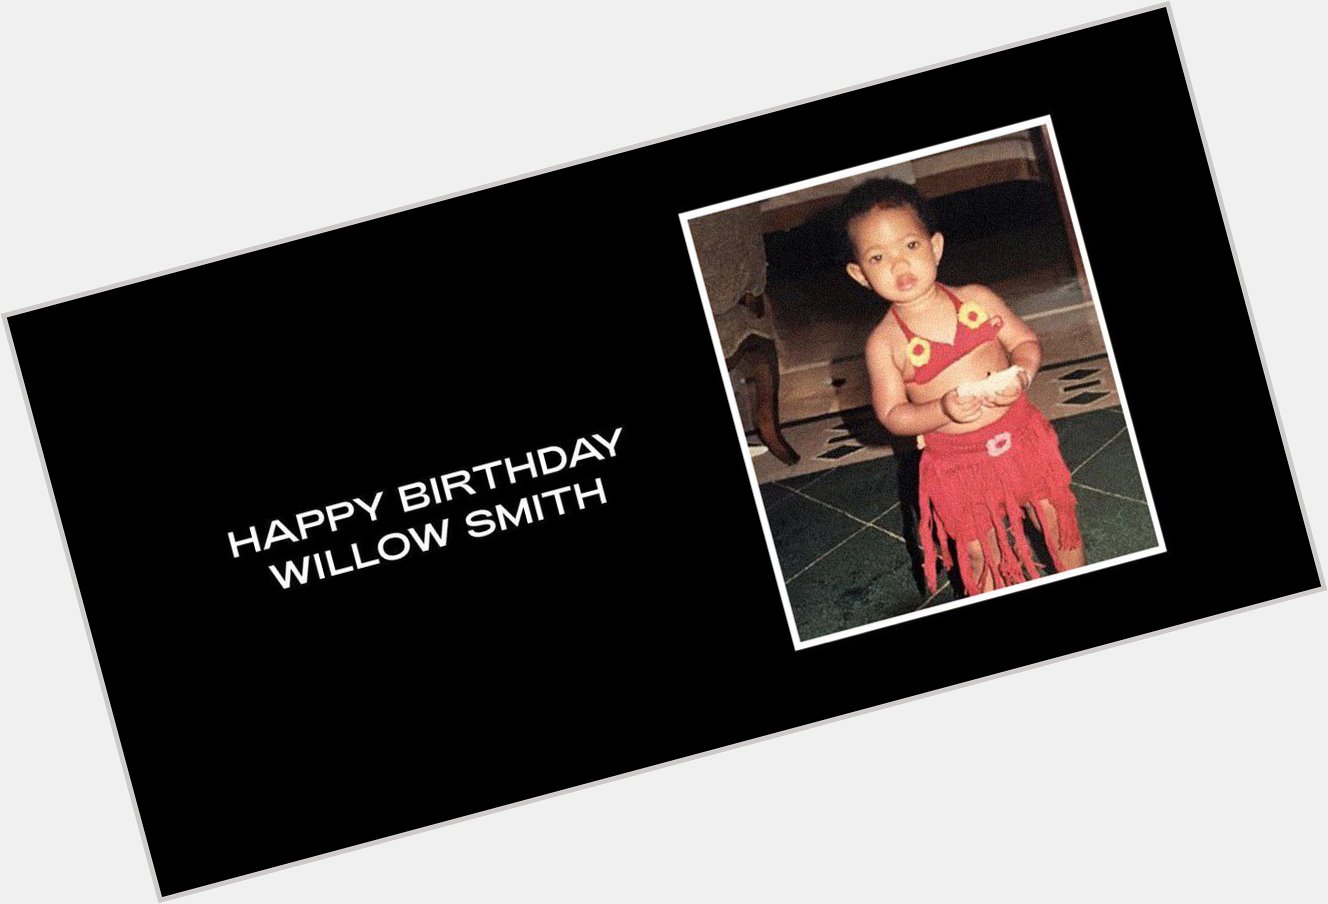 Beyoncé wishes Willow Smith a happy birthday via her website   